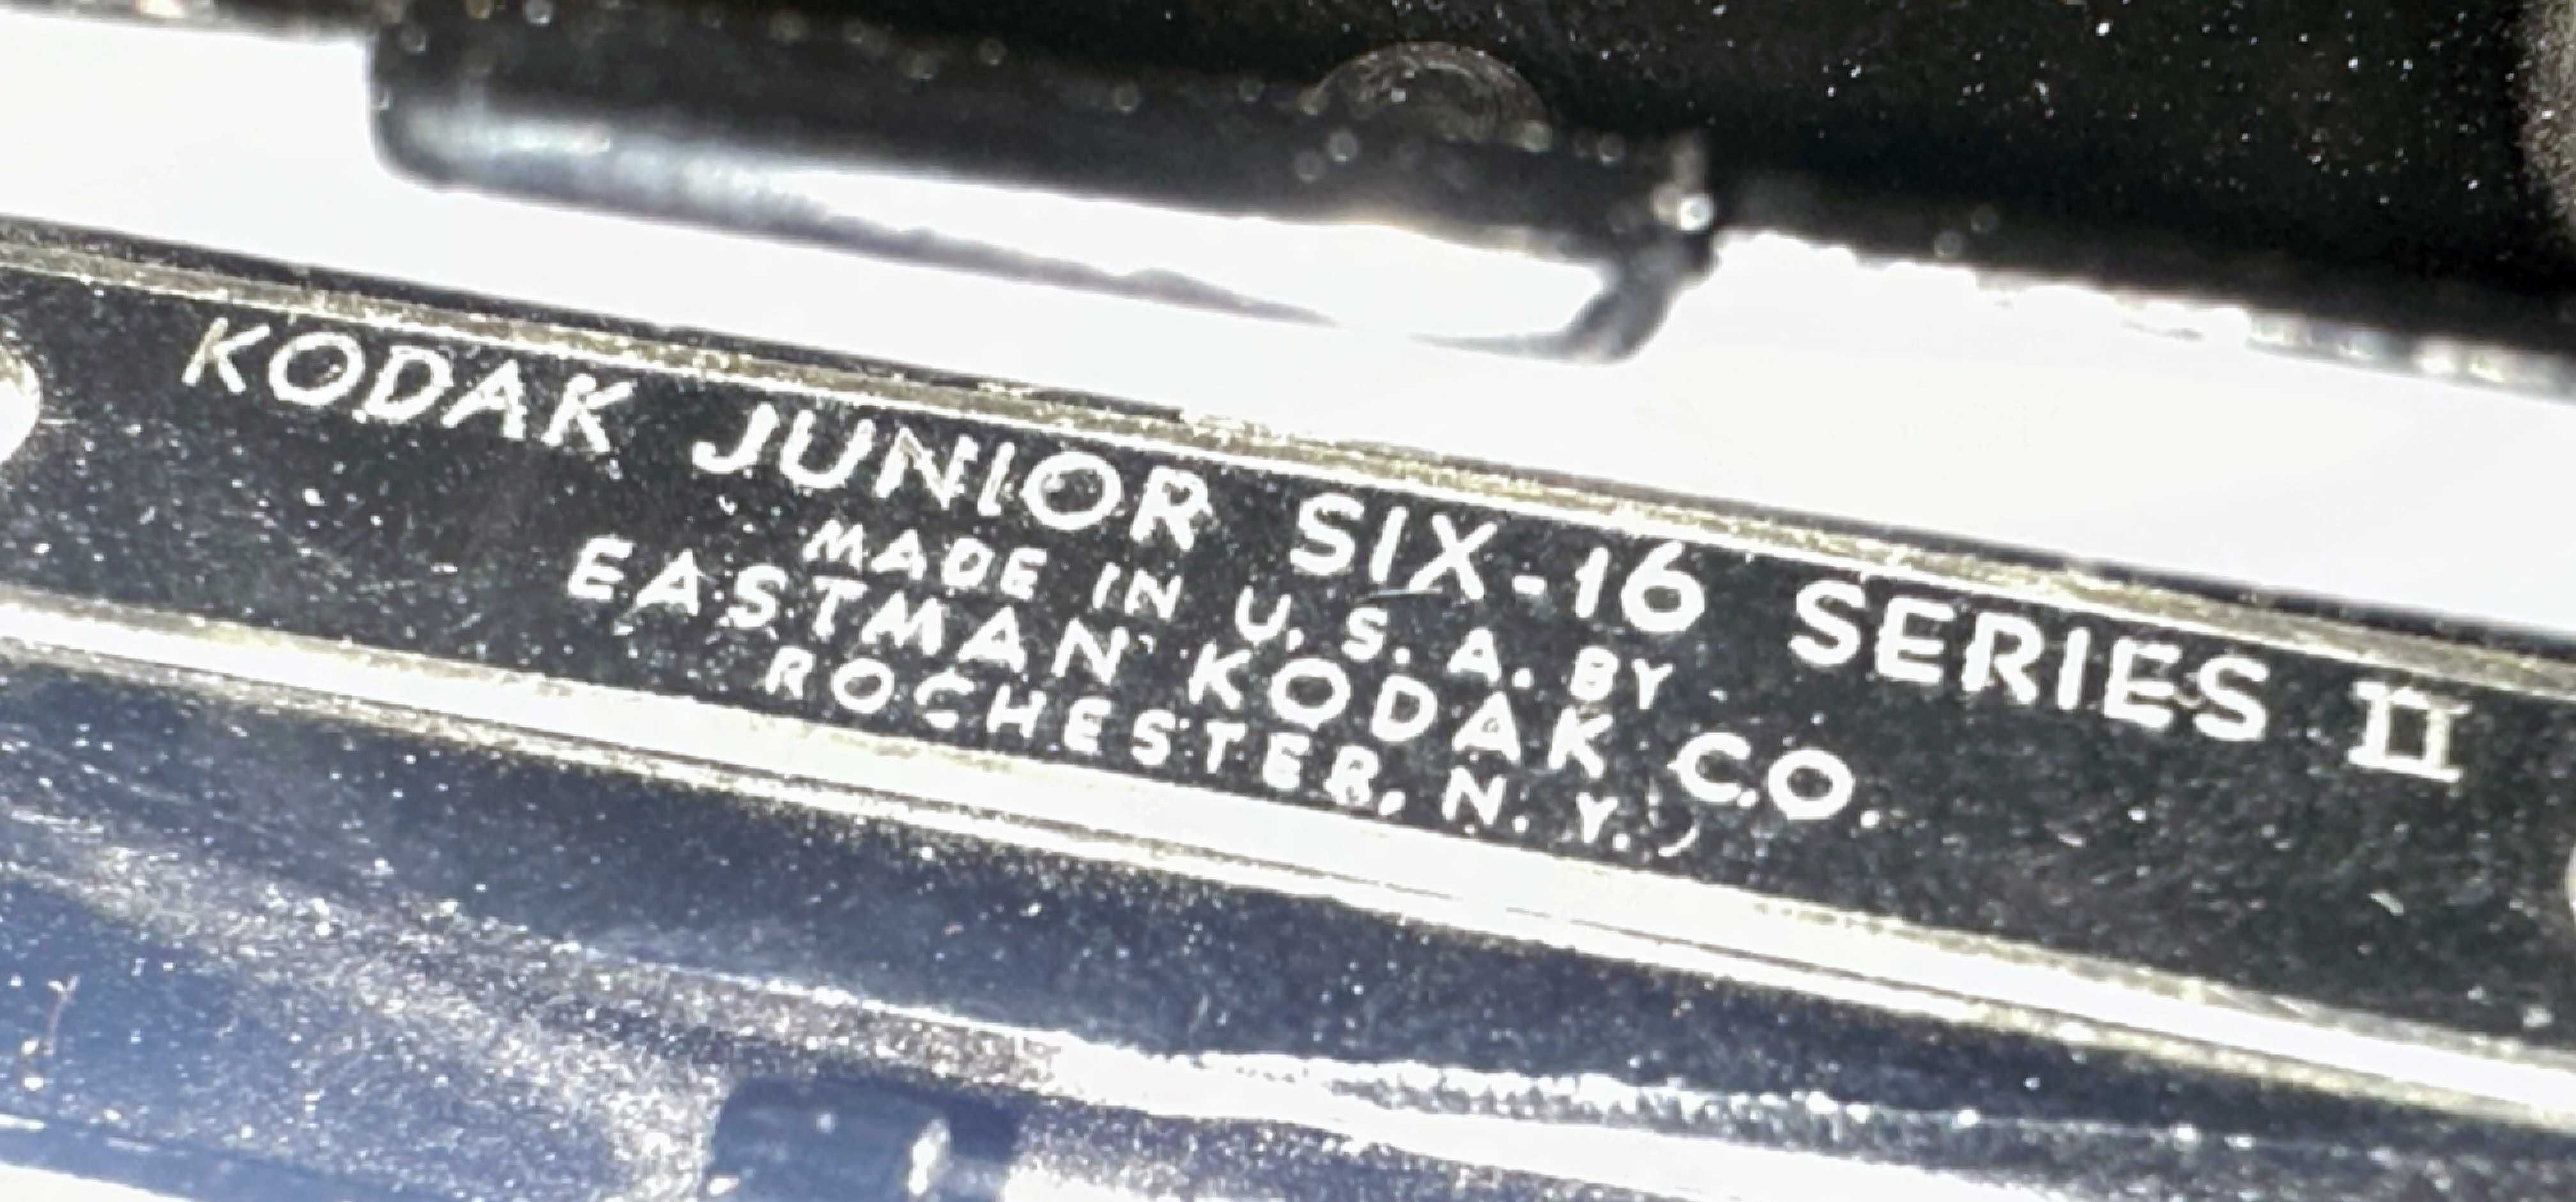 Kodak Junior Six-16 Series II